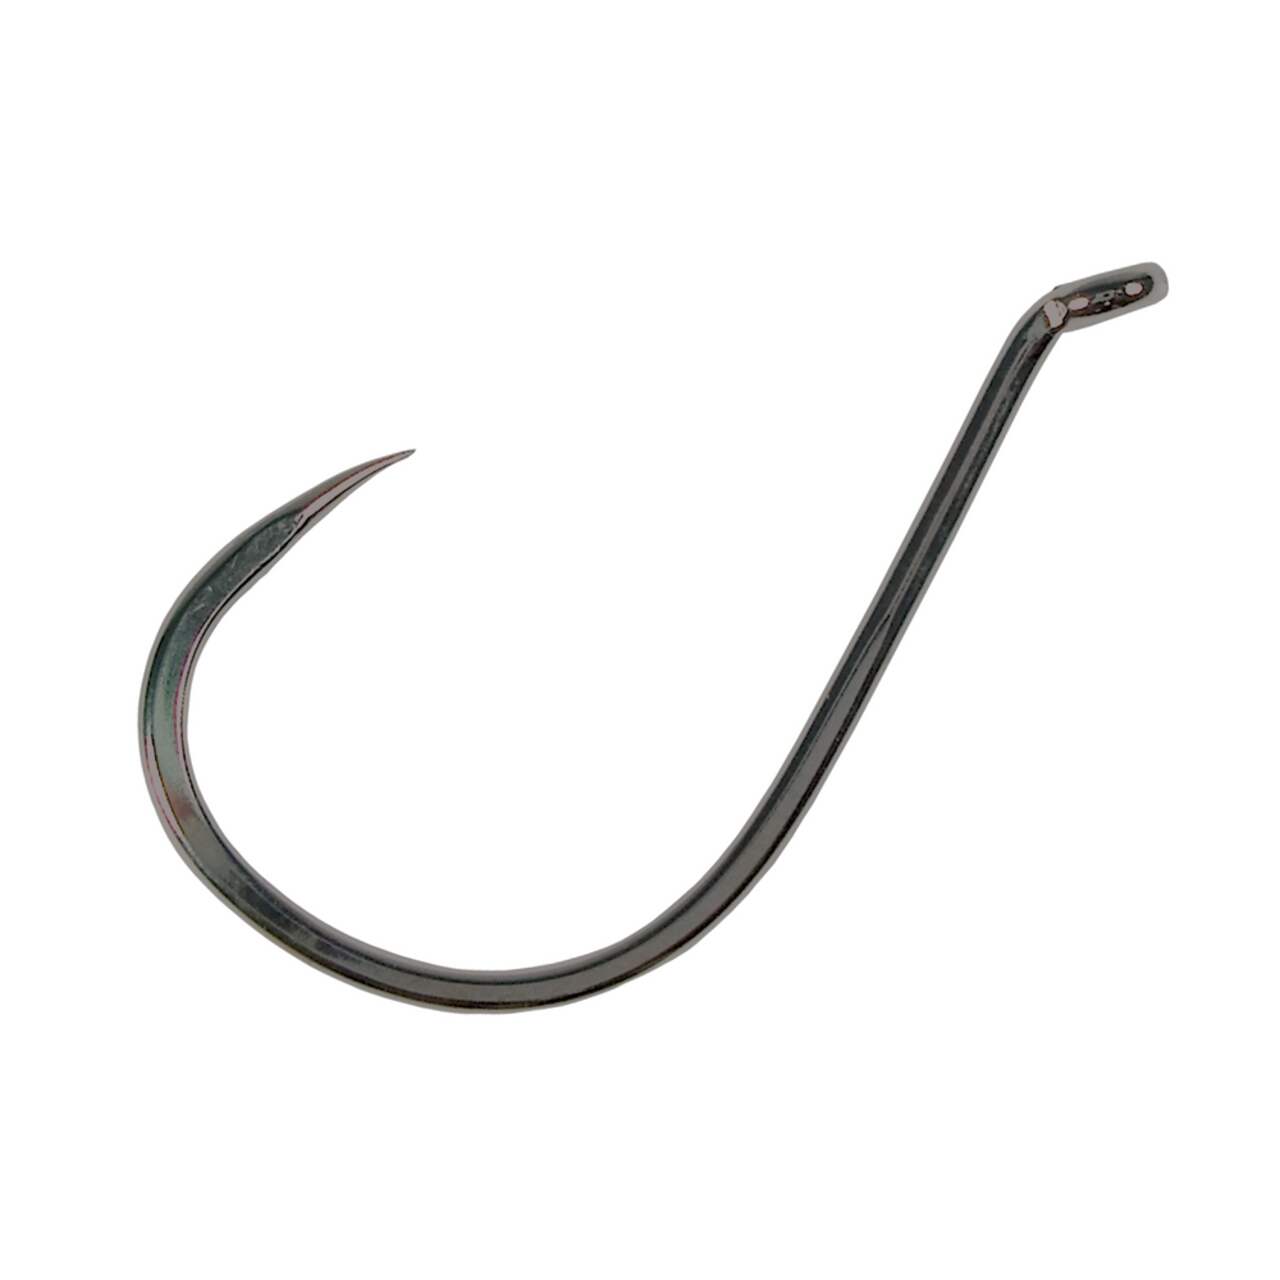 Hook Callbooms Fishing S01 Stainless Steel Scissors With